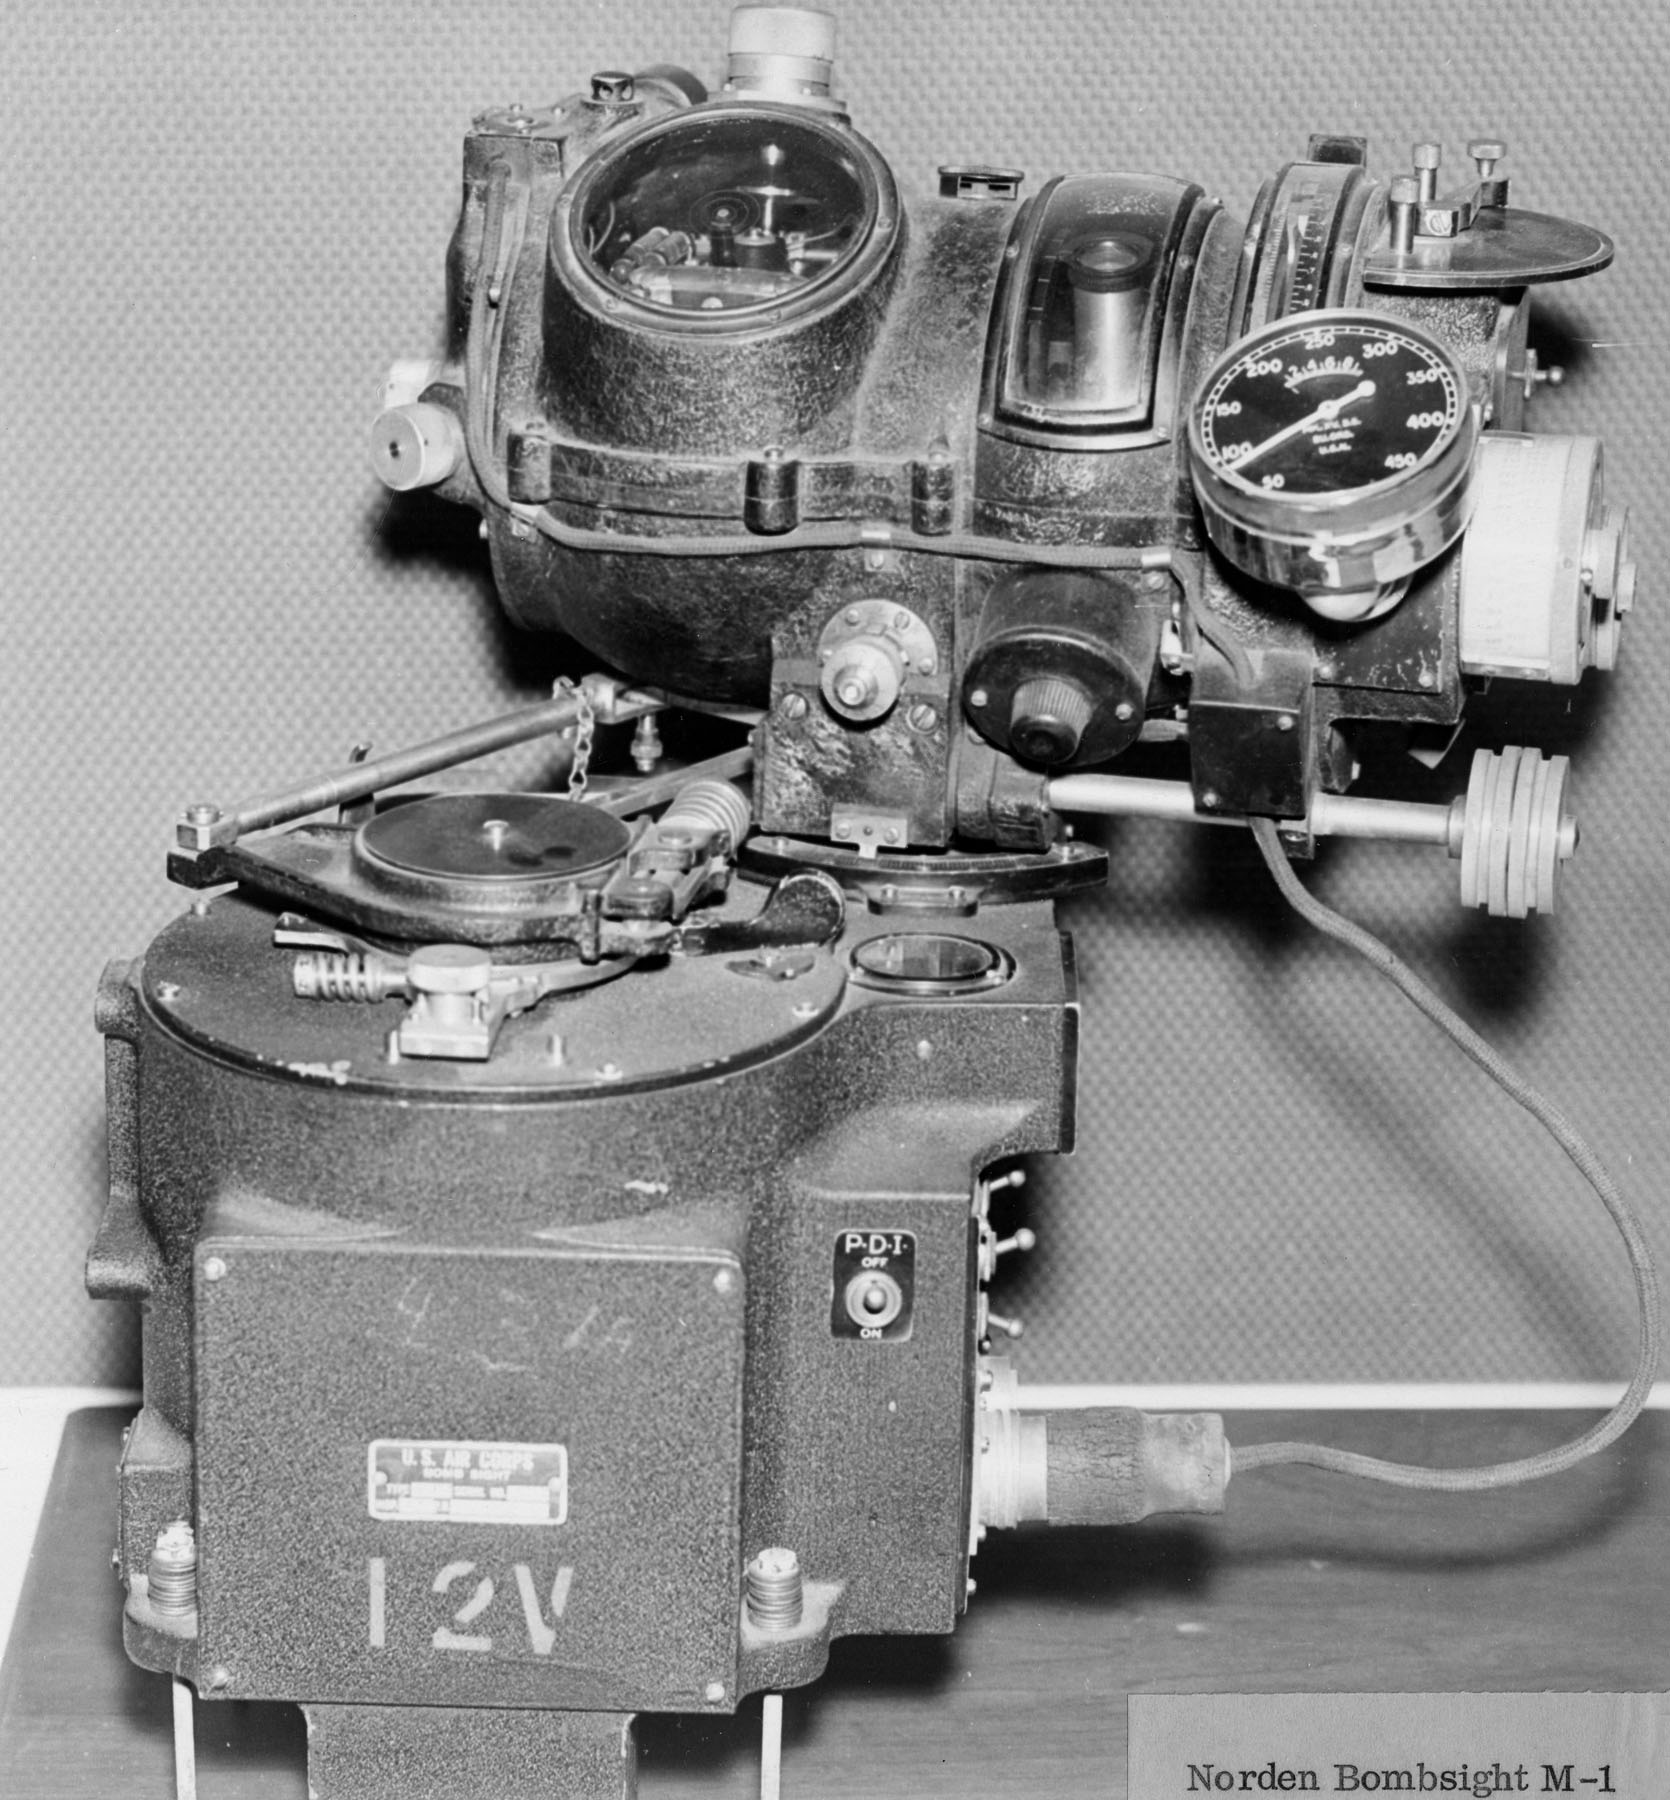 Norden bombsight M1, date unknown